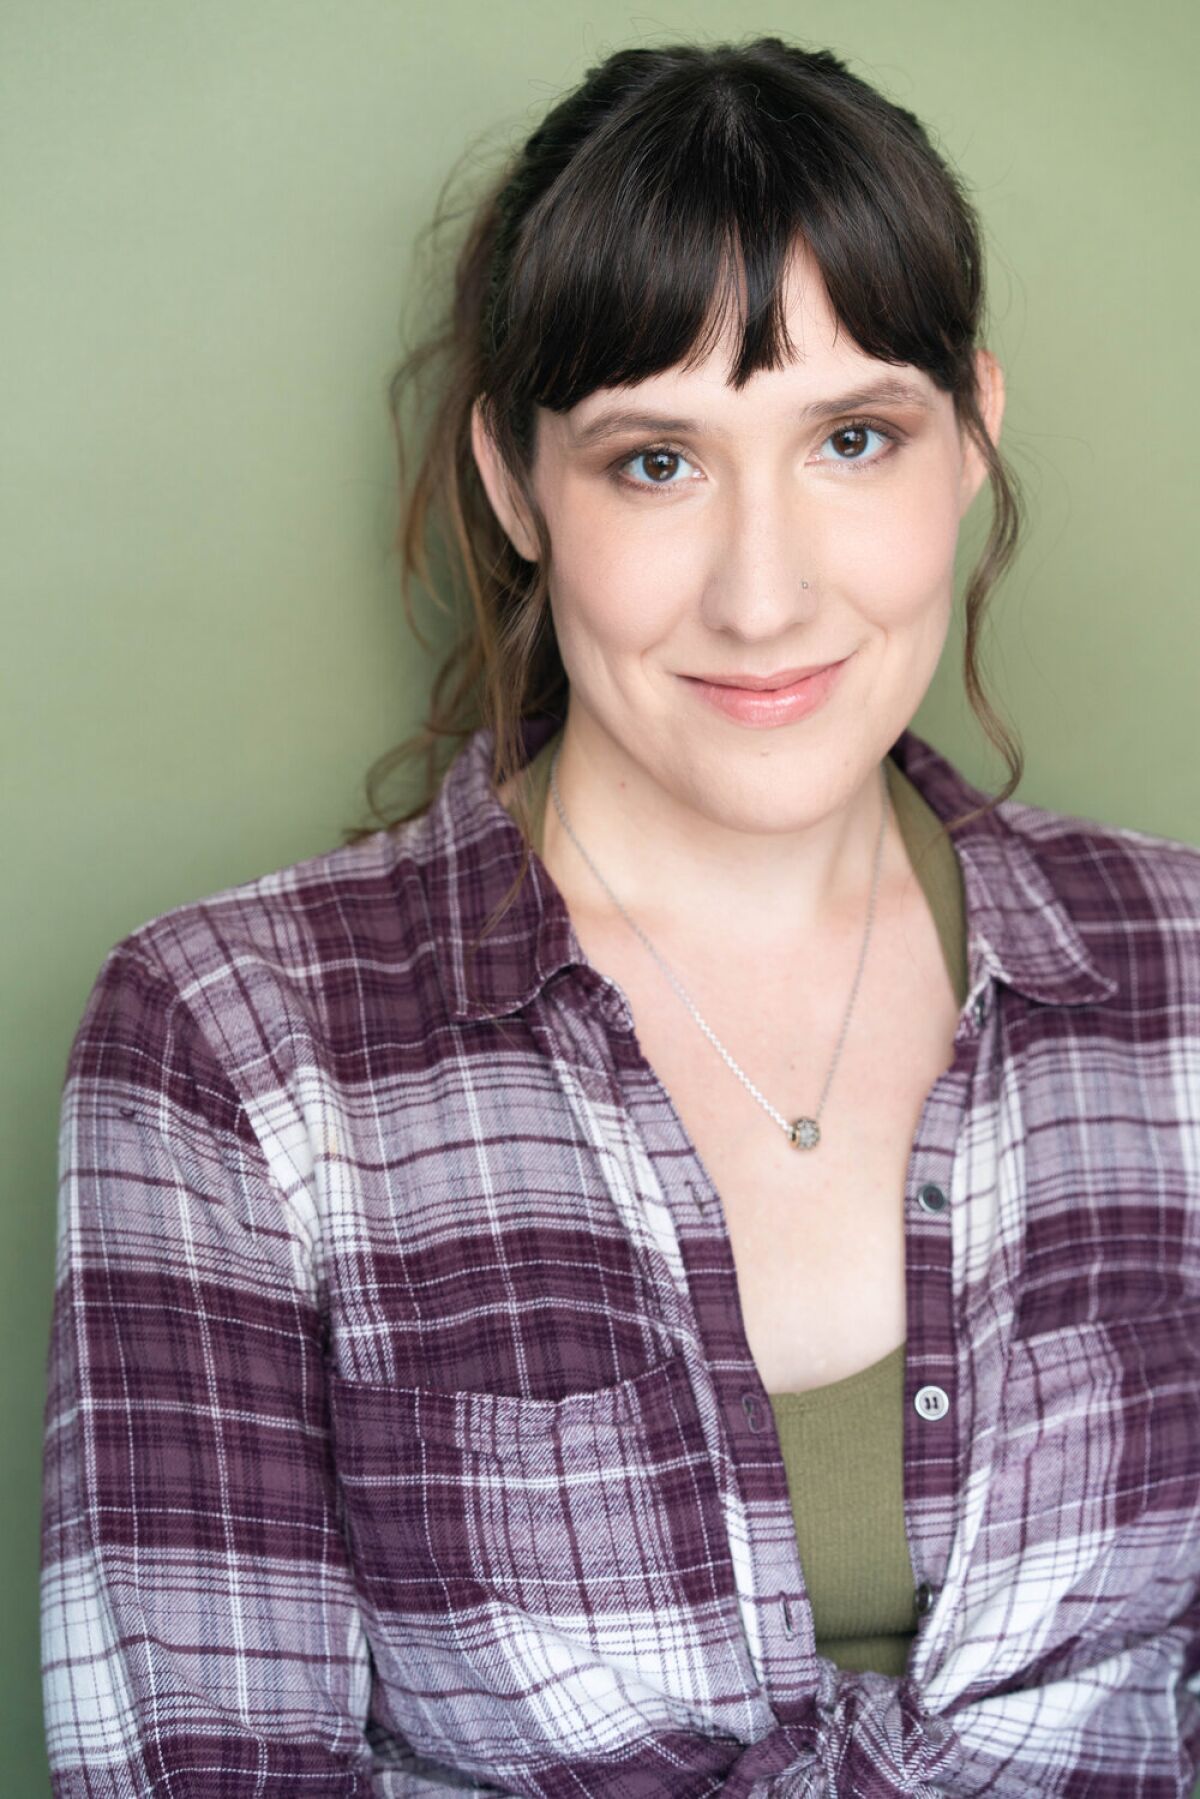 A headshot of a woman wearing a plaid shirt 